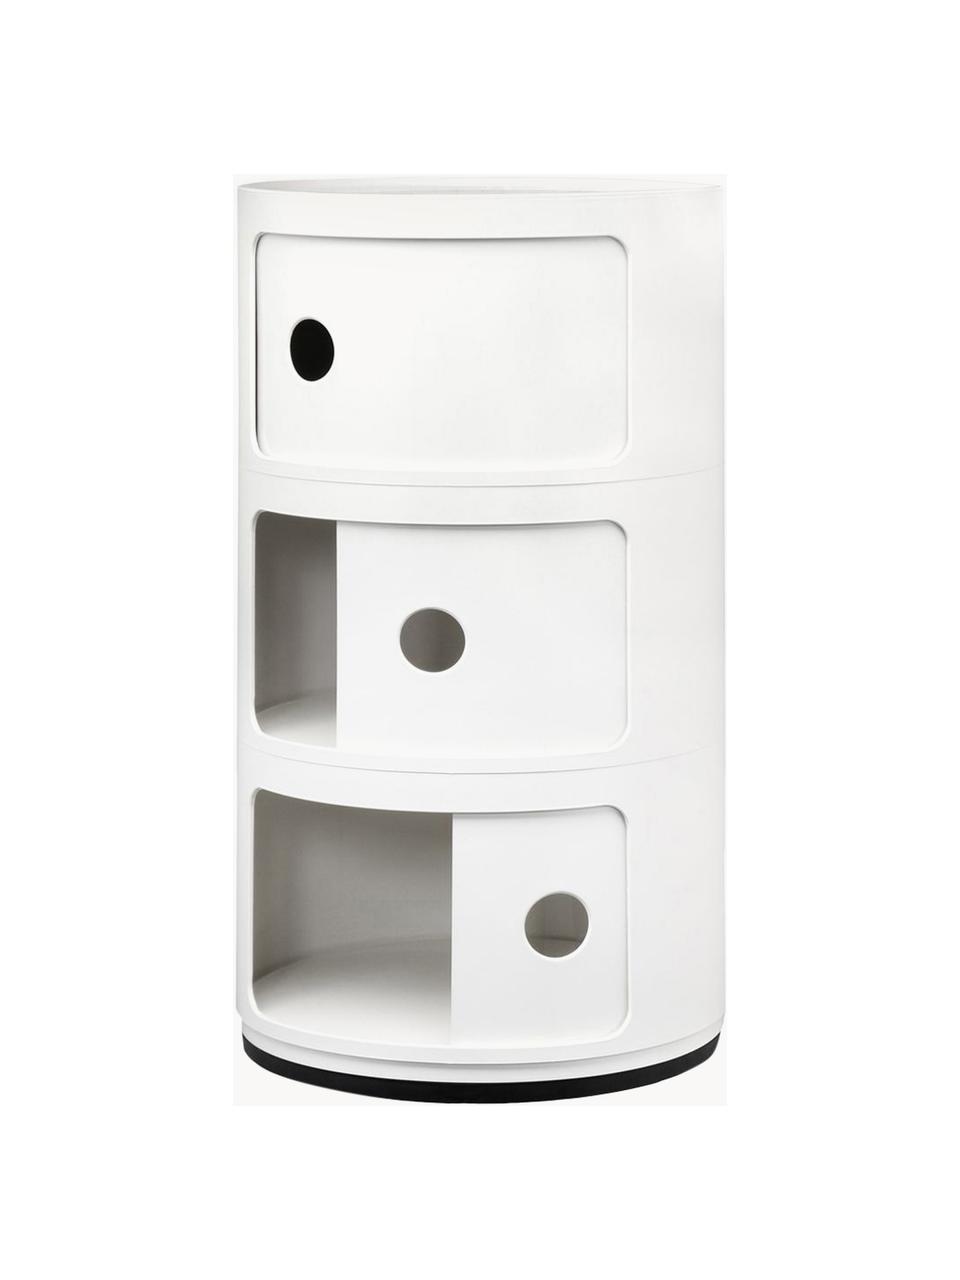 Design Container Componibili, 3 Elemente, Kunststoff (ABS), lackiert, Greenguard-zertifiziert, Weiss, glänzend, Ø 32 x H 59 cm